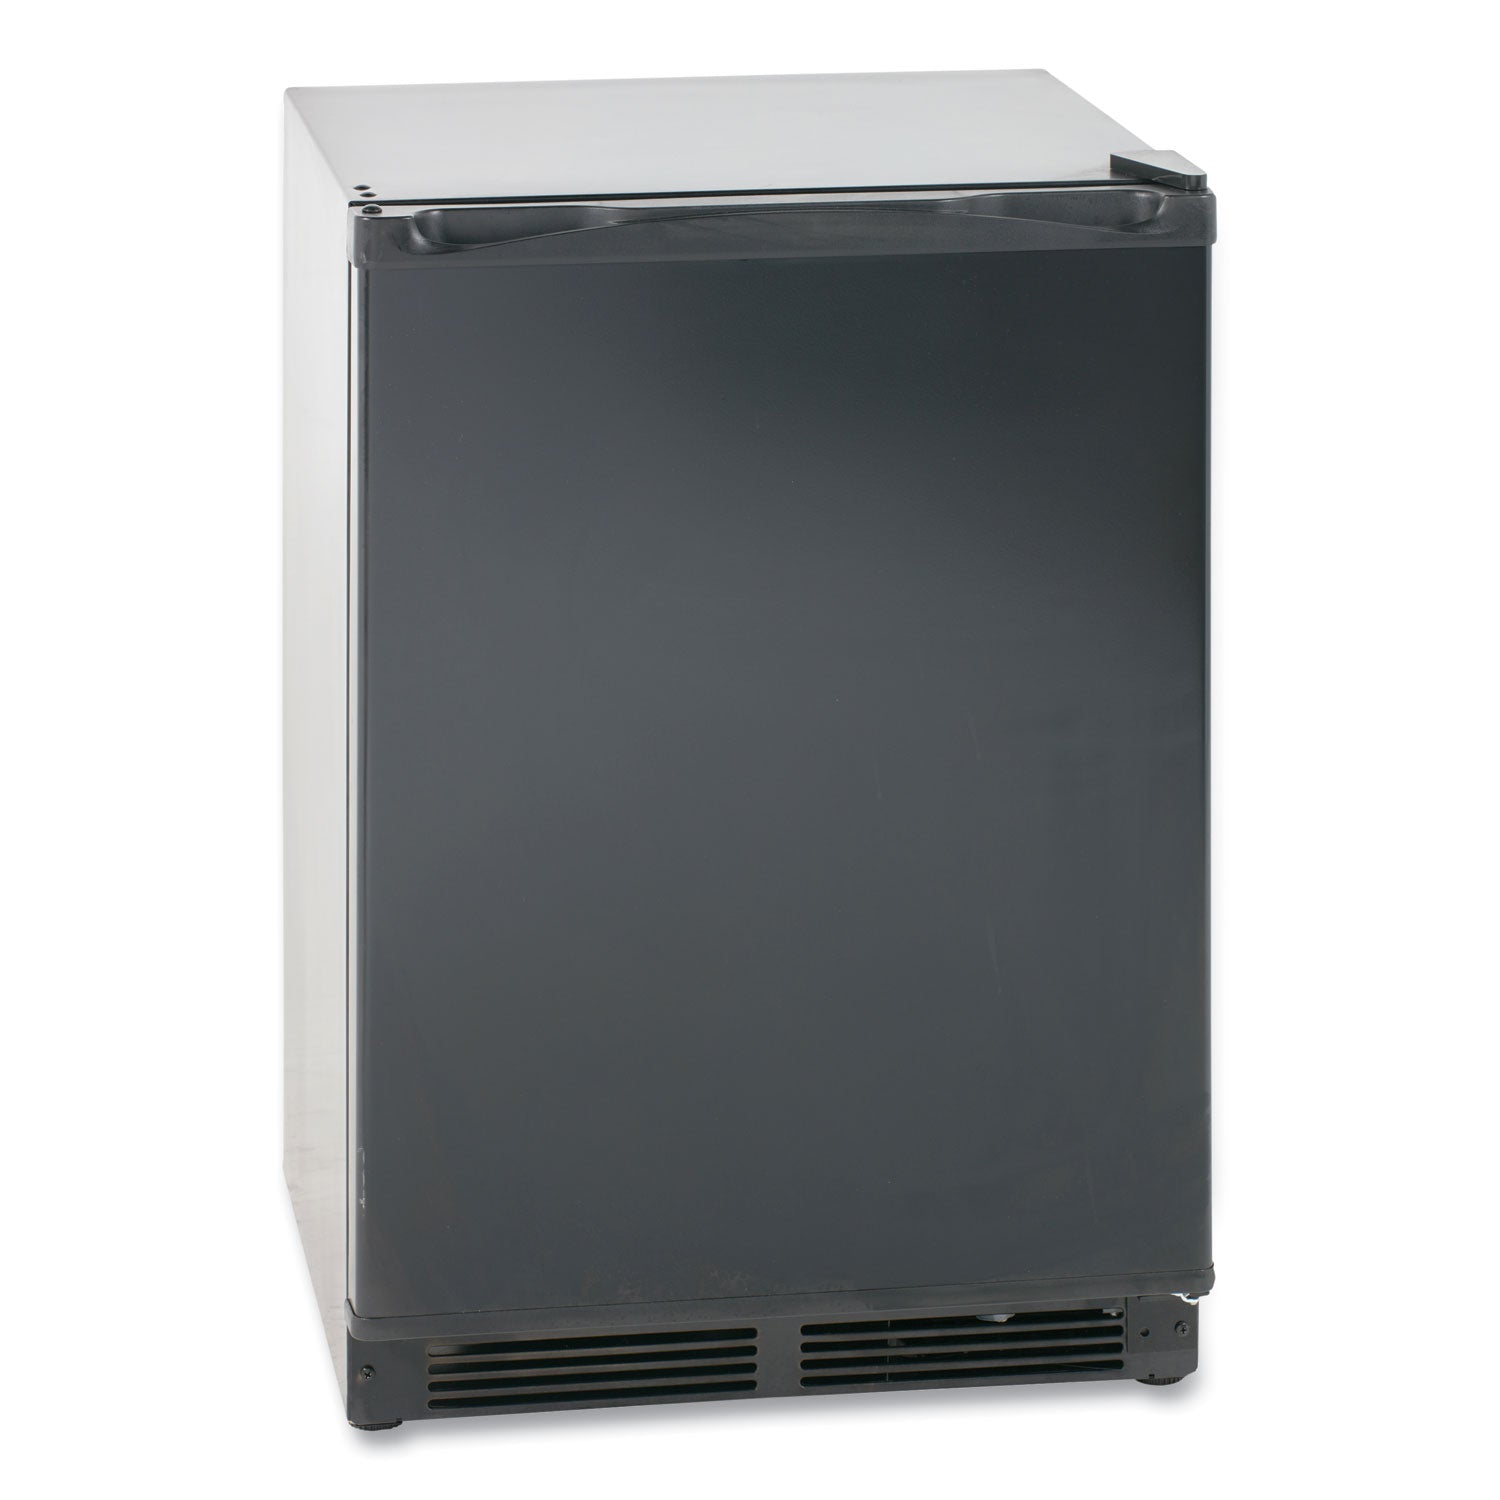 52-cu-ft-counter-height-refrigerator-black_avarm52t1bb - 1